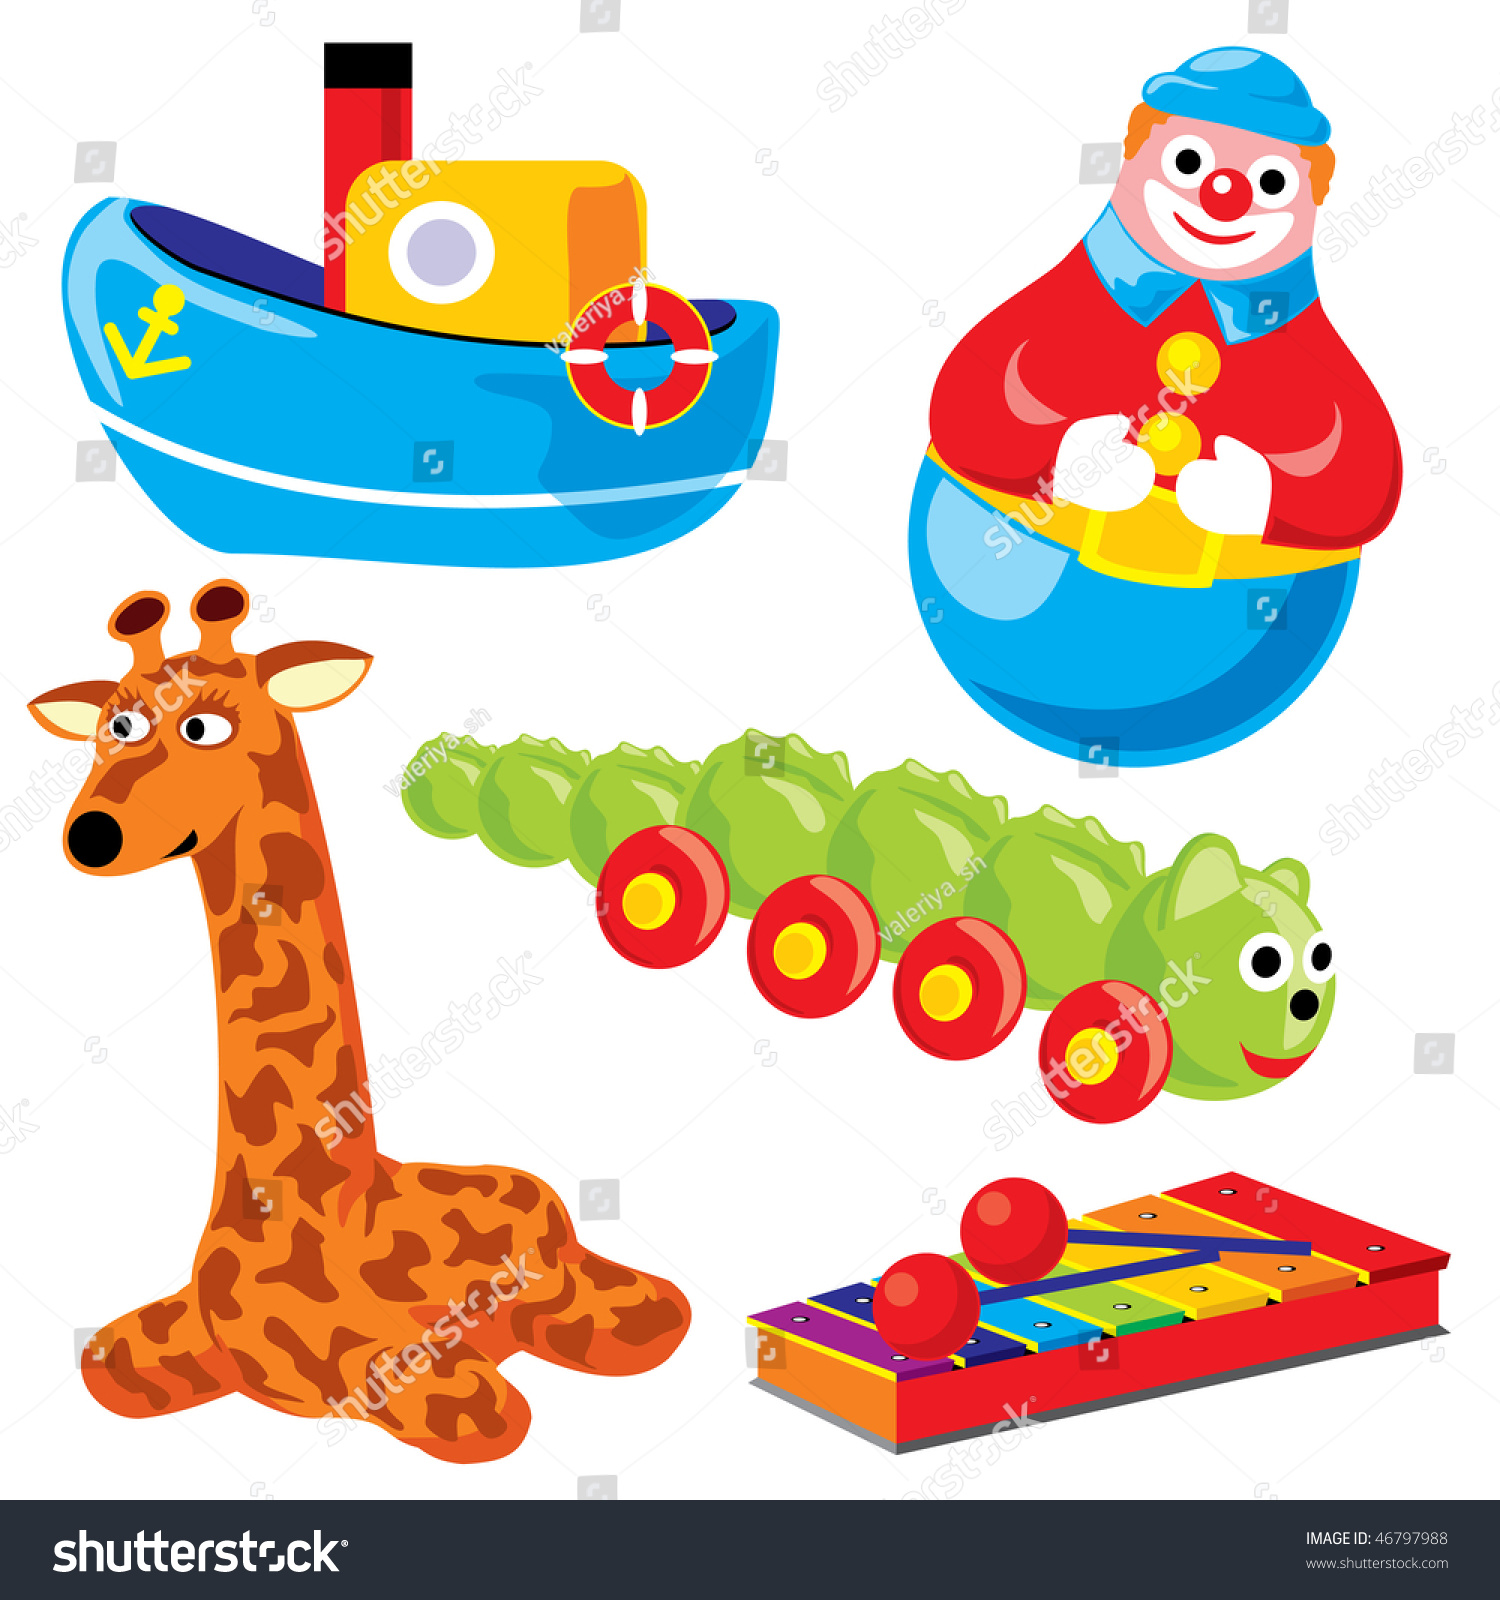 Set Of Vector Images. Children'S Toys - 46797988 : Shutterstock